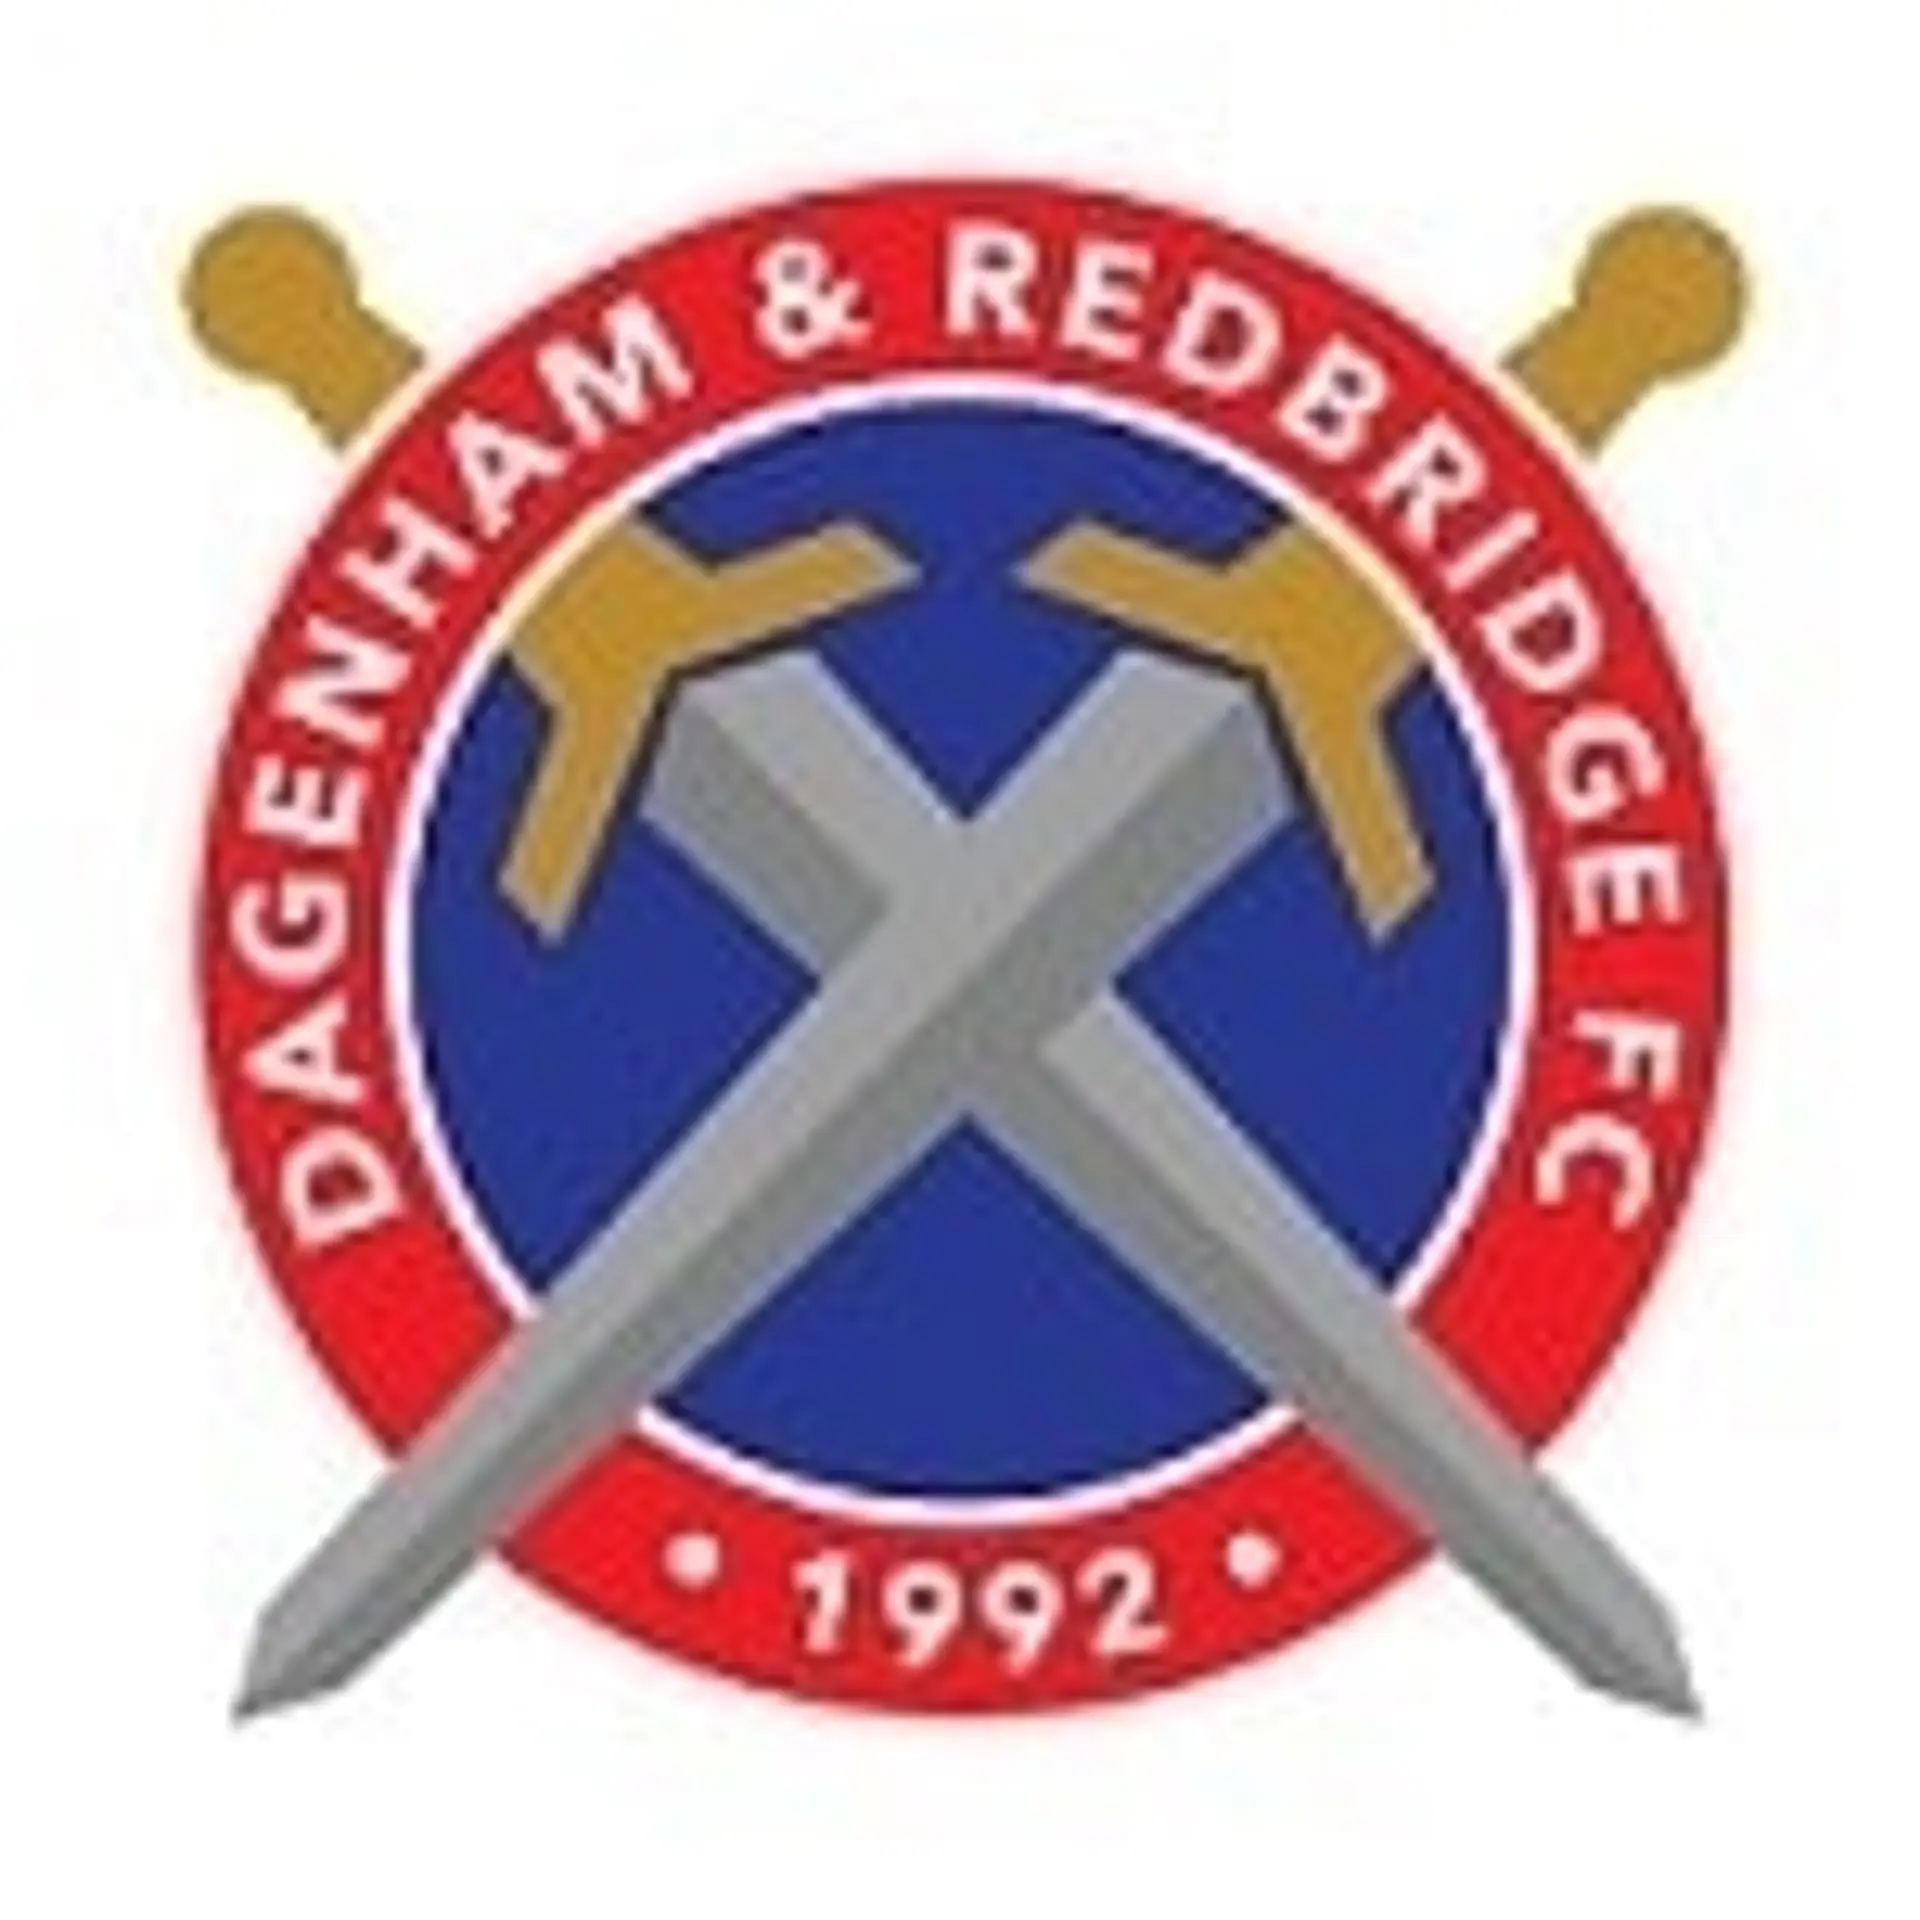 Dagenham & Redbridge Noticias 